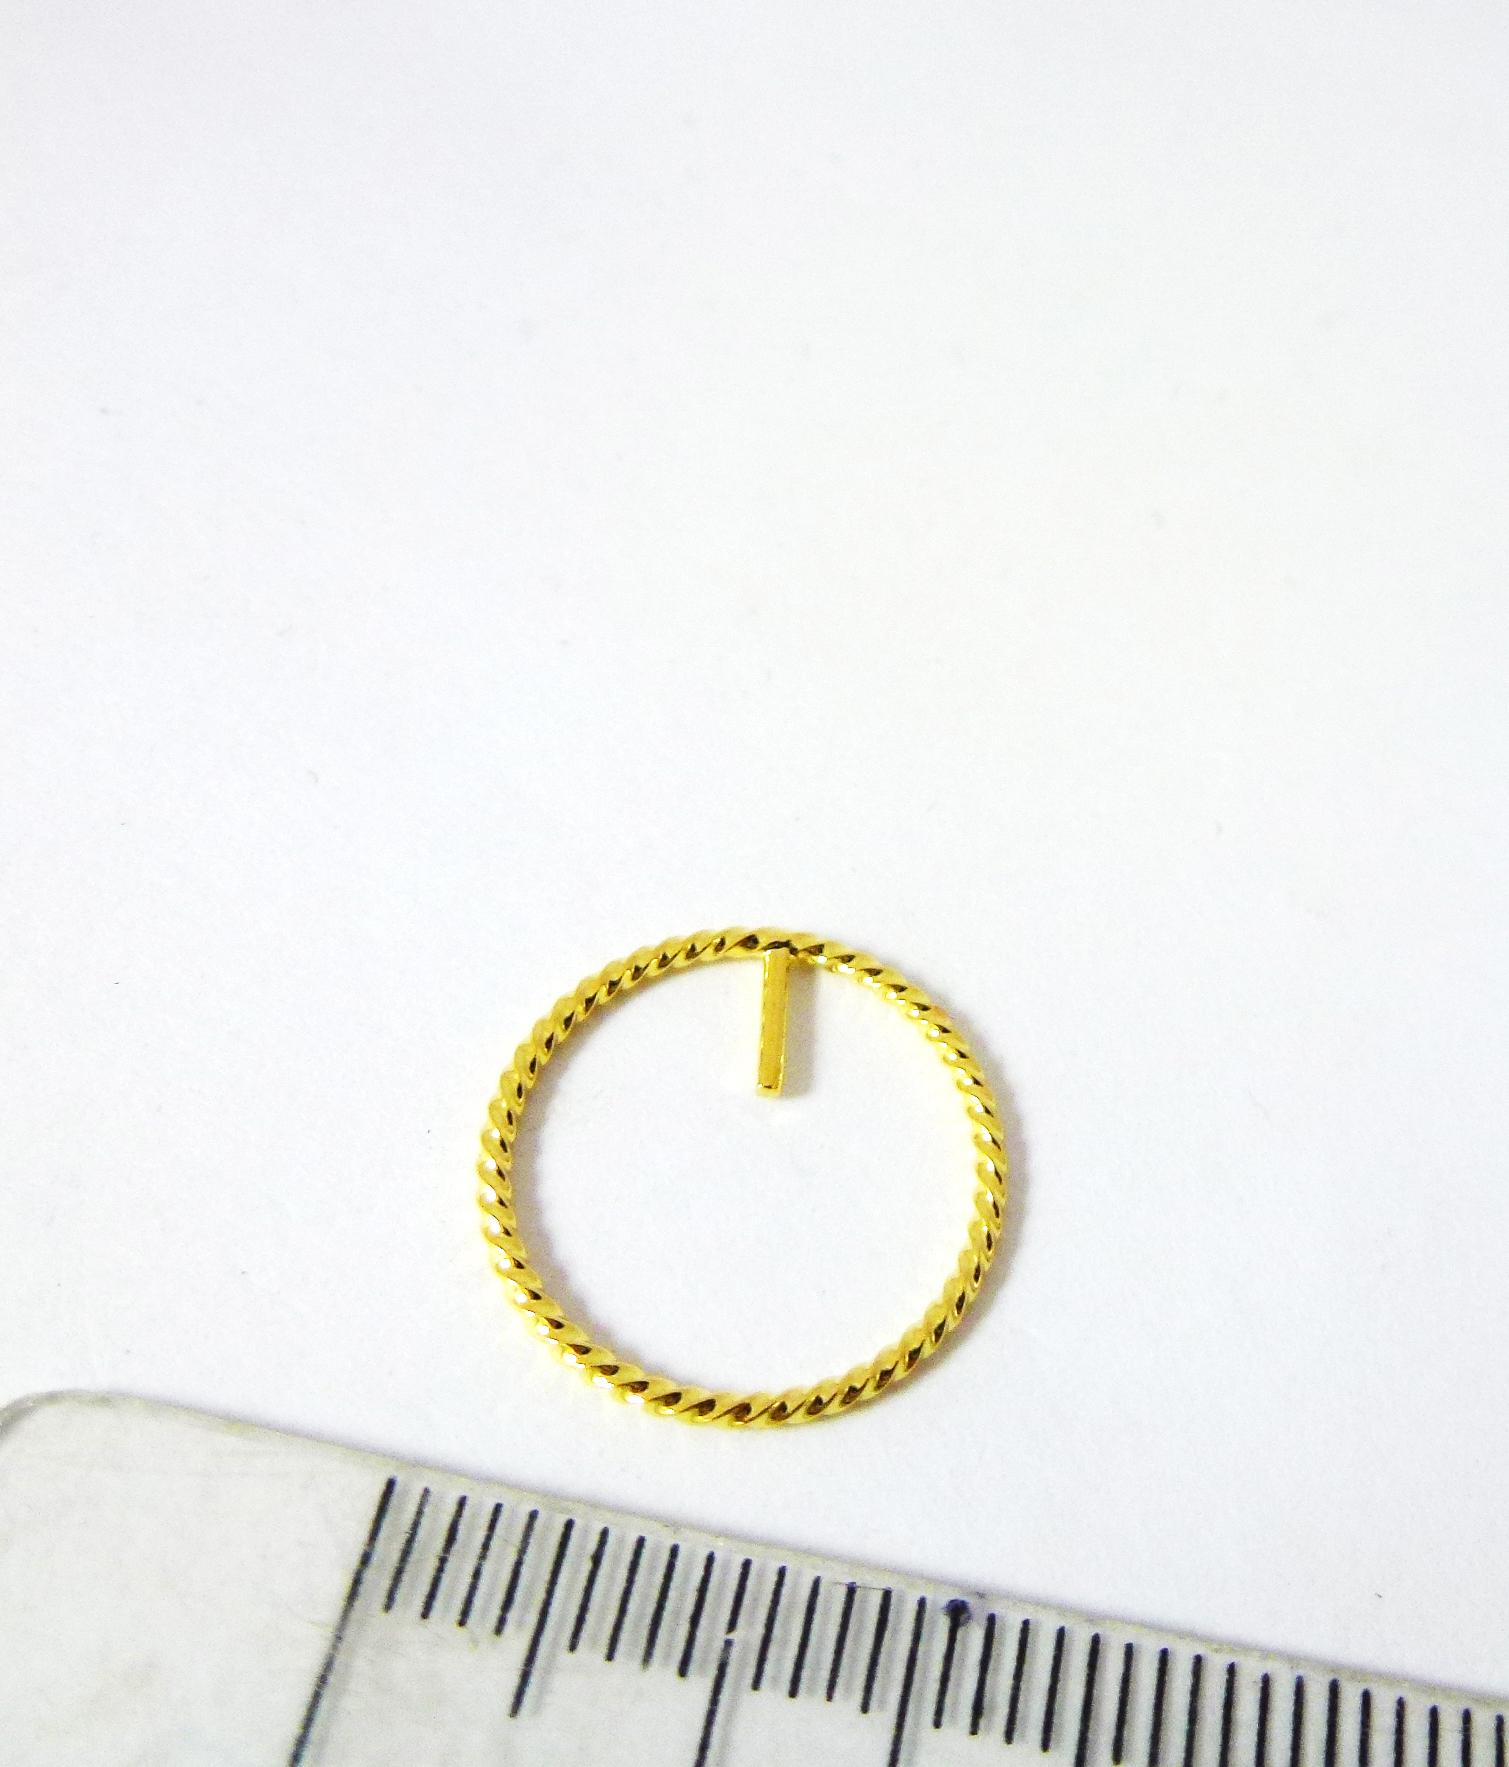 17mm銅鍍金色螺紋圓圈附黏針